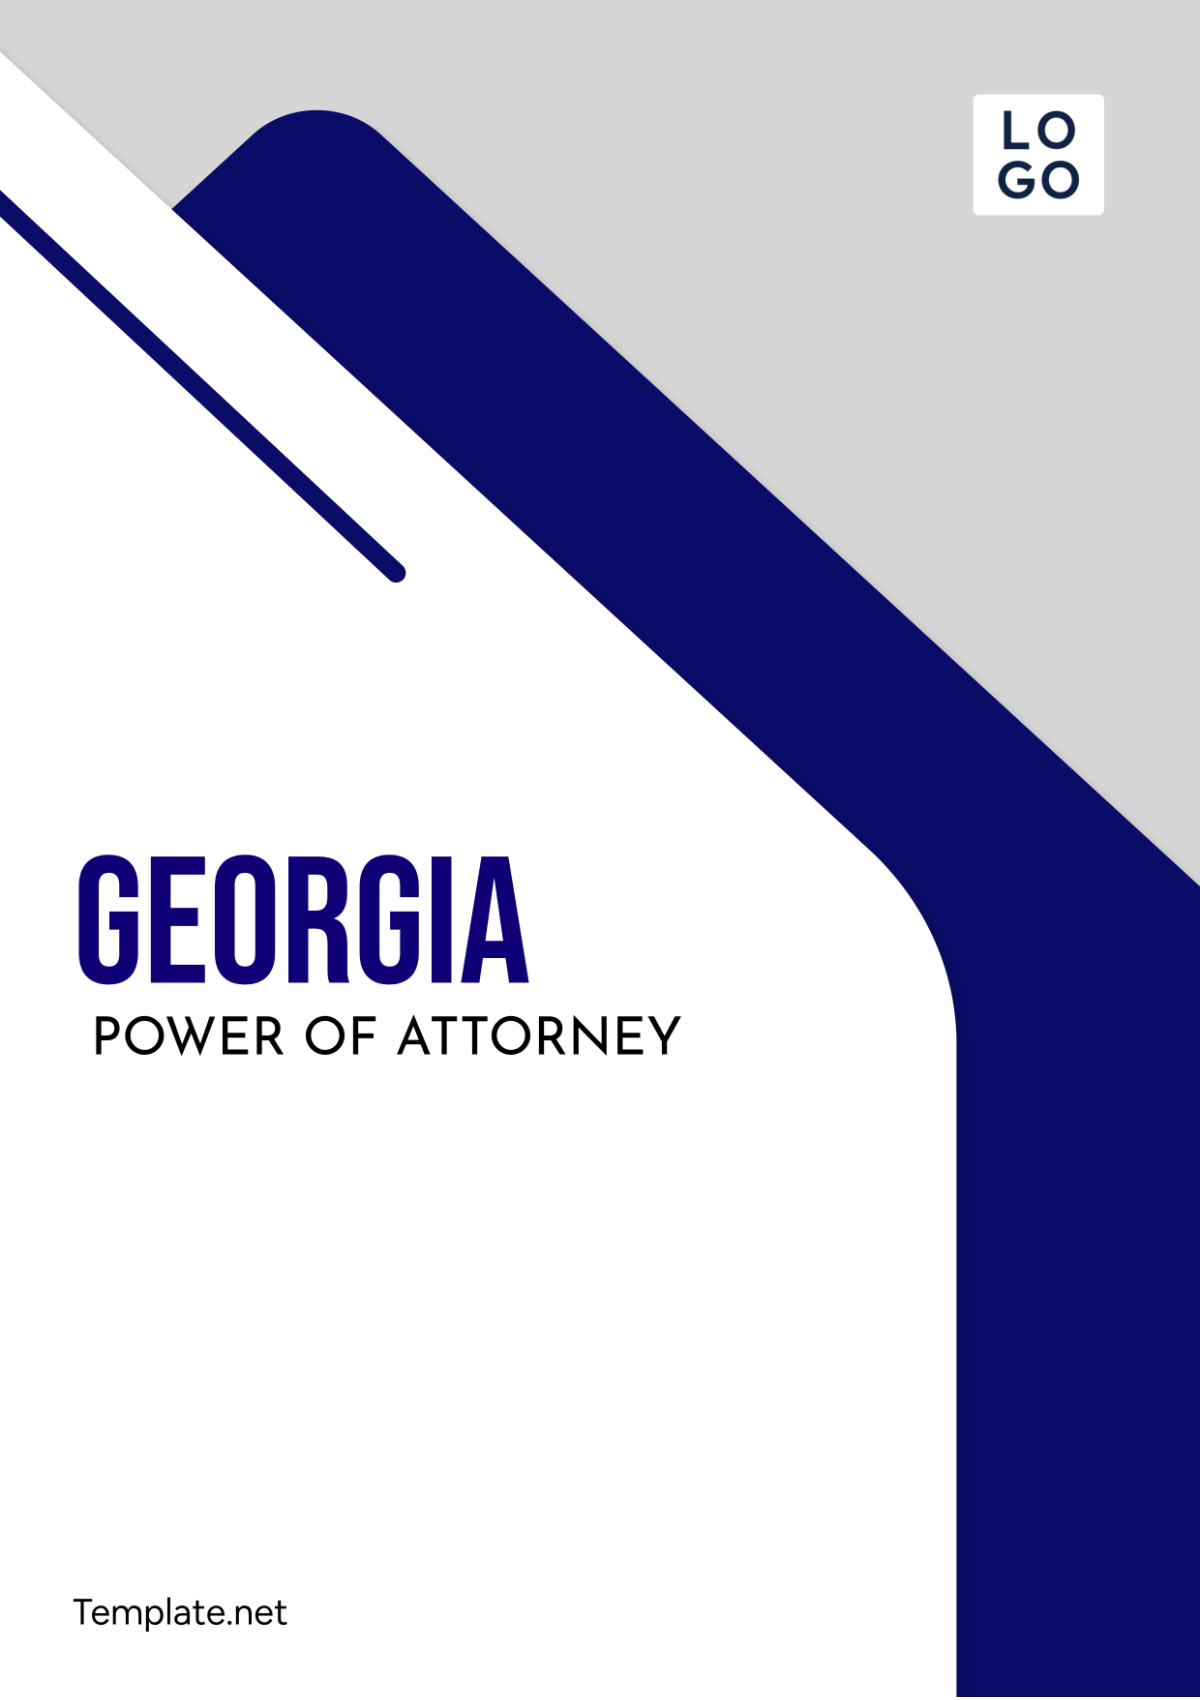 Georgia Power of Attorney Template